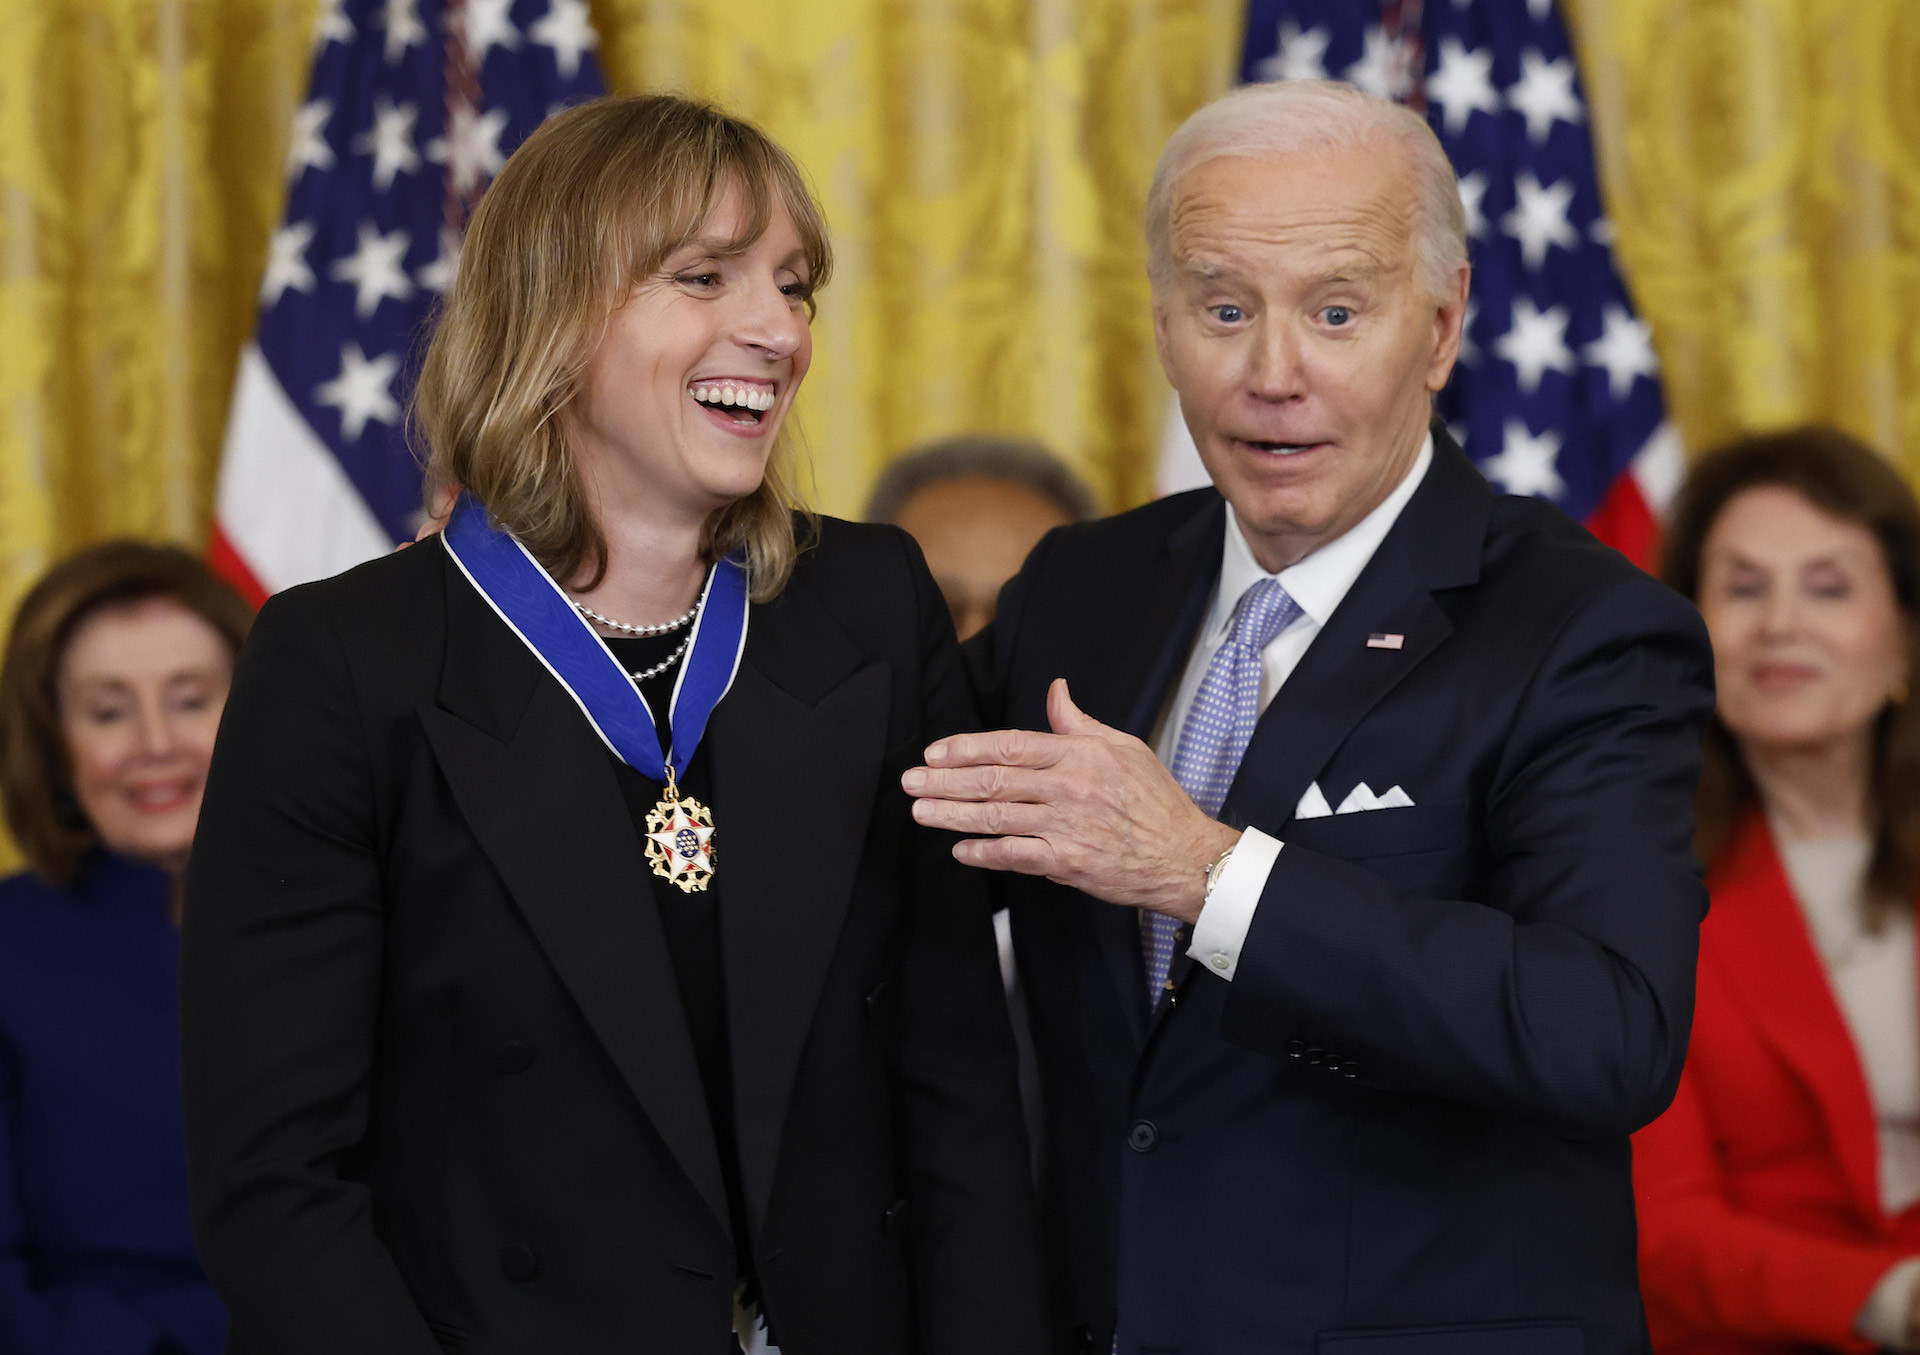 Joe Biden awards Katie Ledecky the Presidential Medal of Freedom. GETTY IMAGES